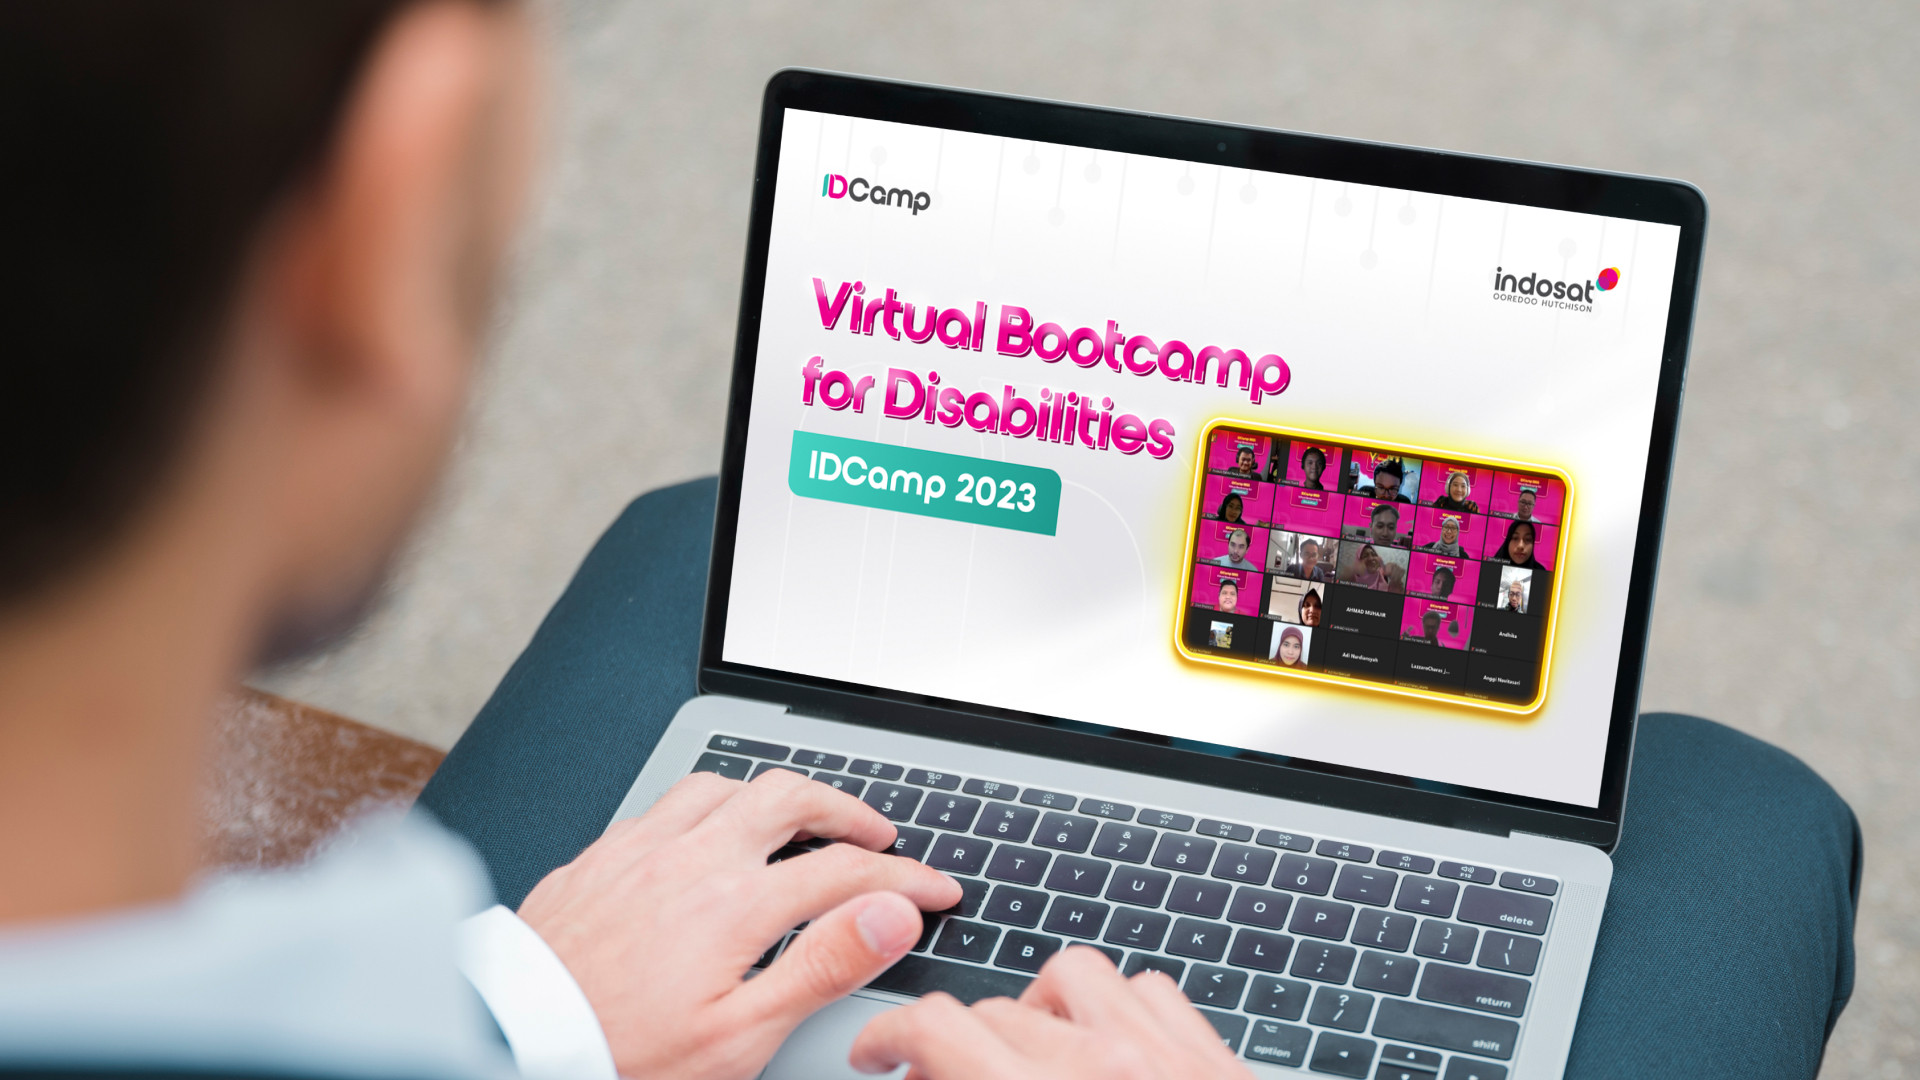 Indosat Ooredoo Hutchison gelar IDCamp virtual bootcamp for disabilities